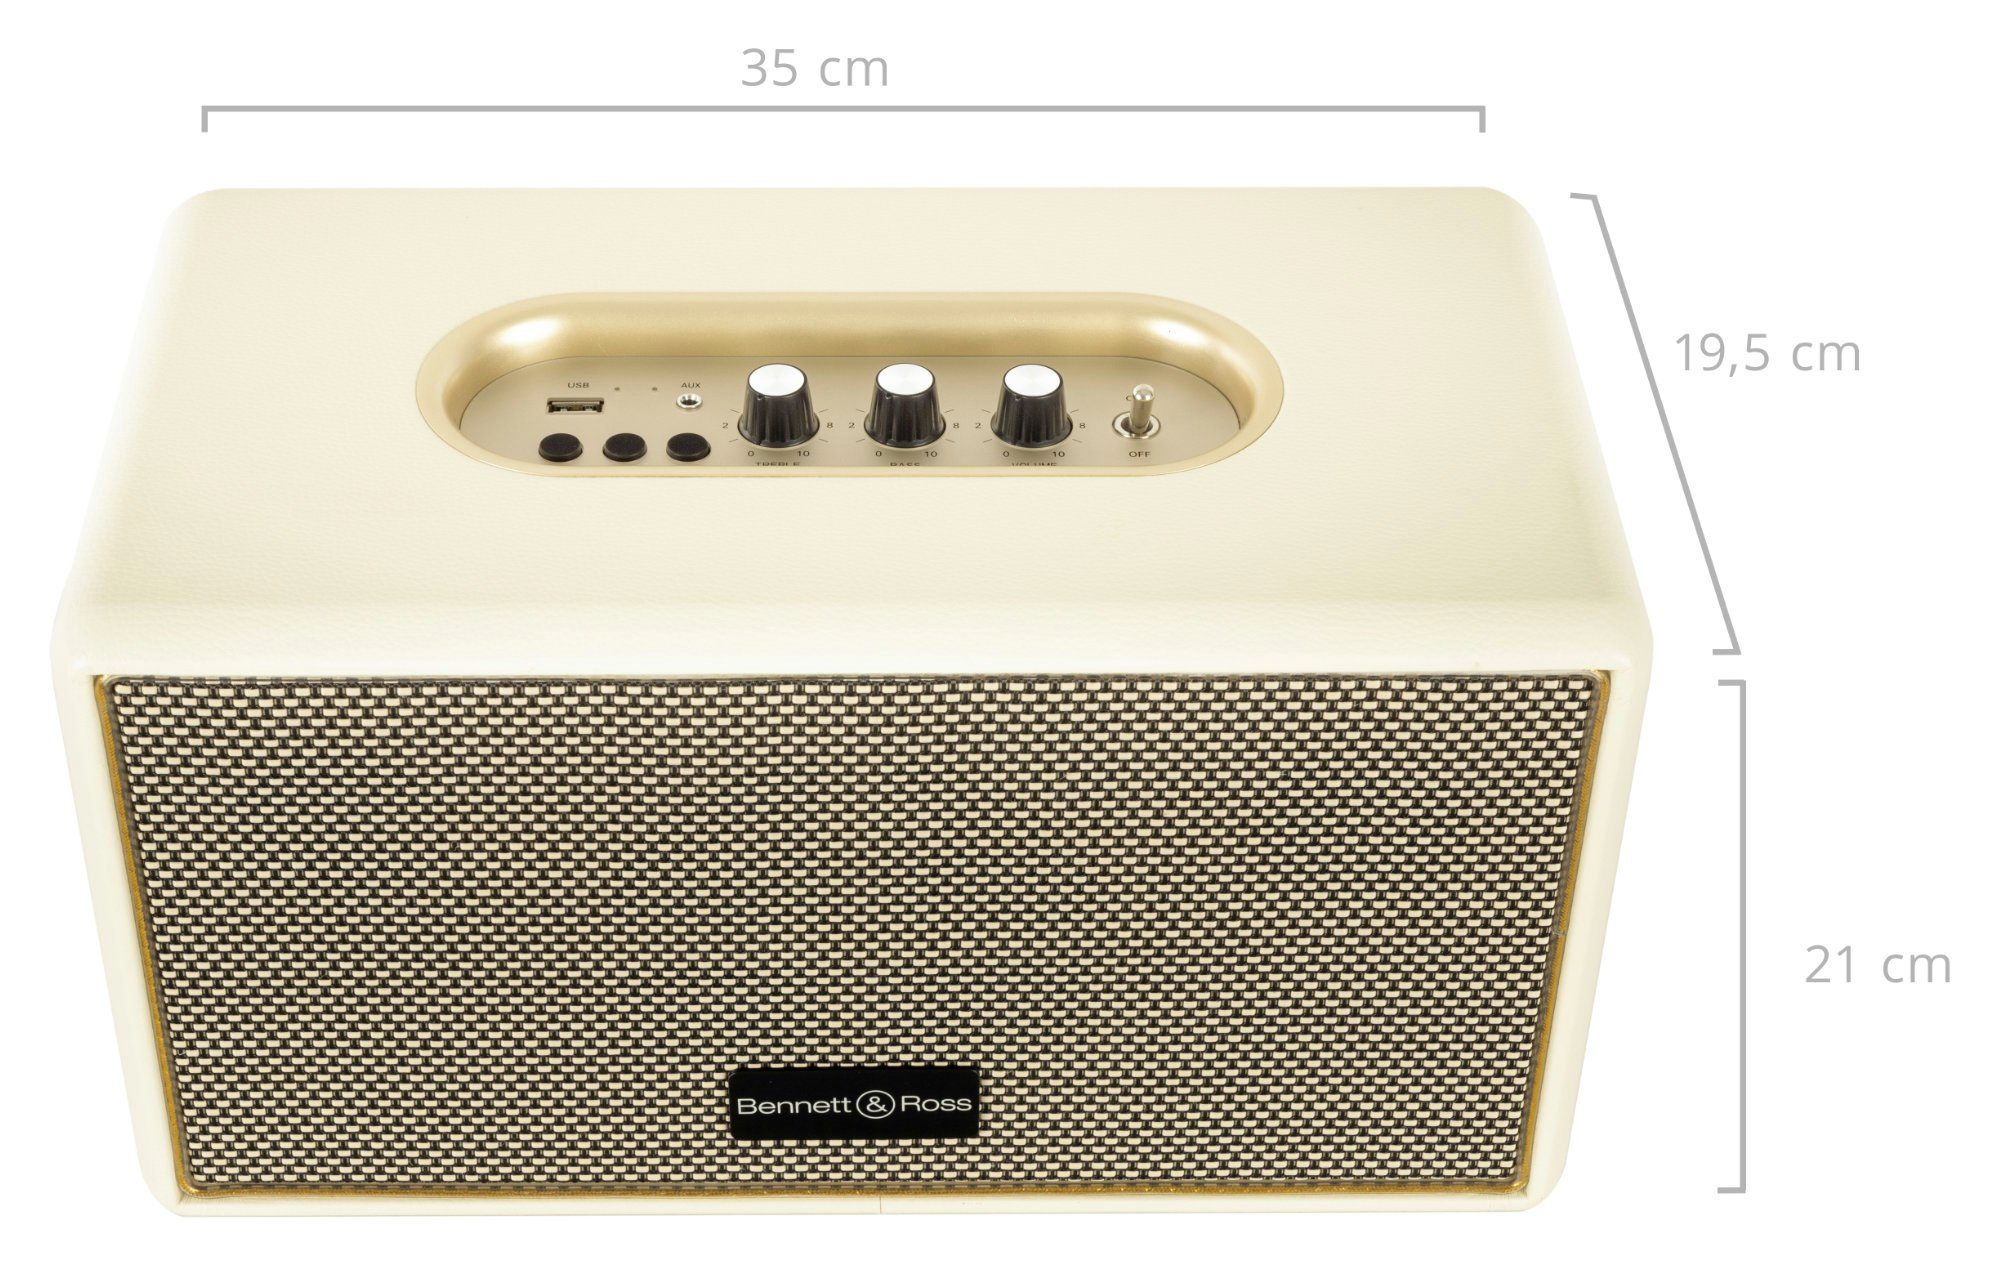 BB-860 Retro & Creme-Weiß (60 Ross in Bluetooth W, Blackmore Lederoptik) Lautsprecher Bennett Stereoanlage